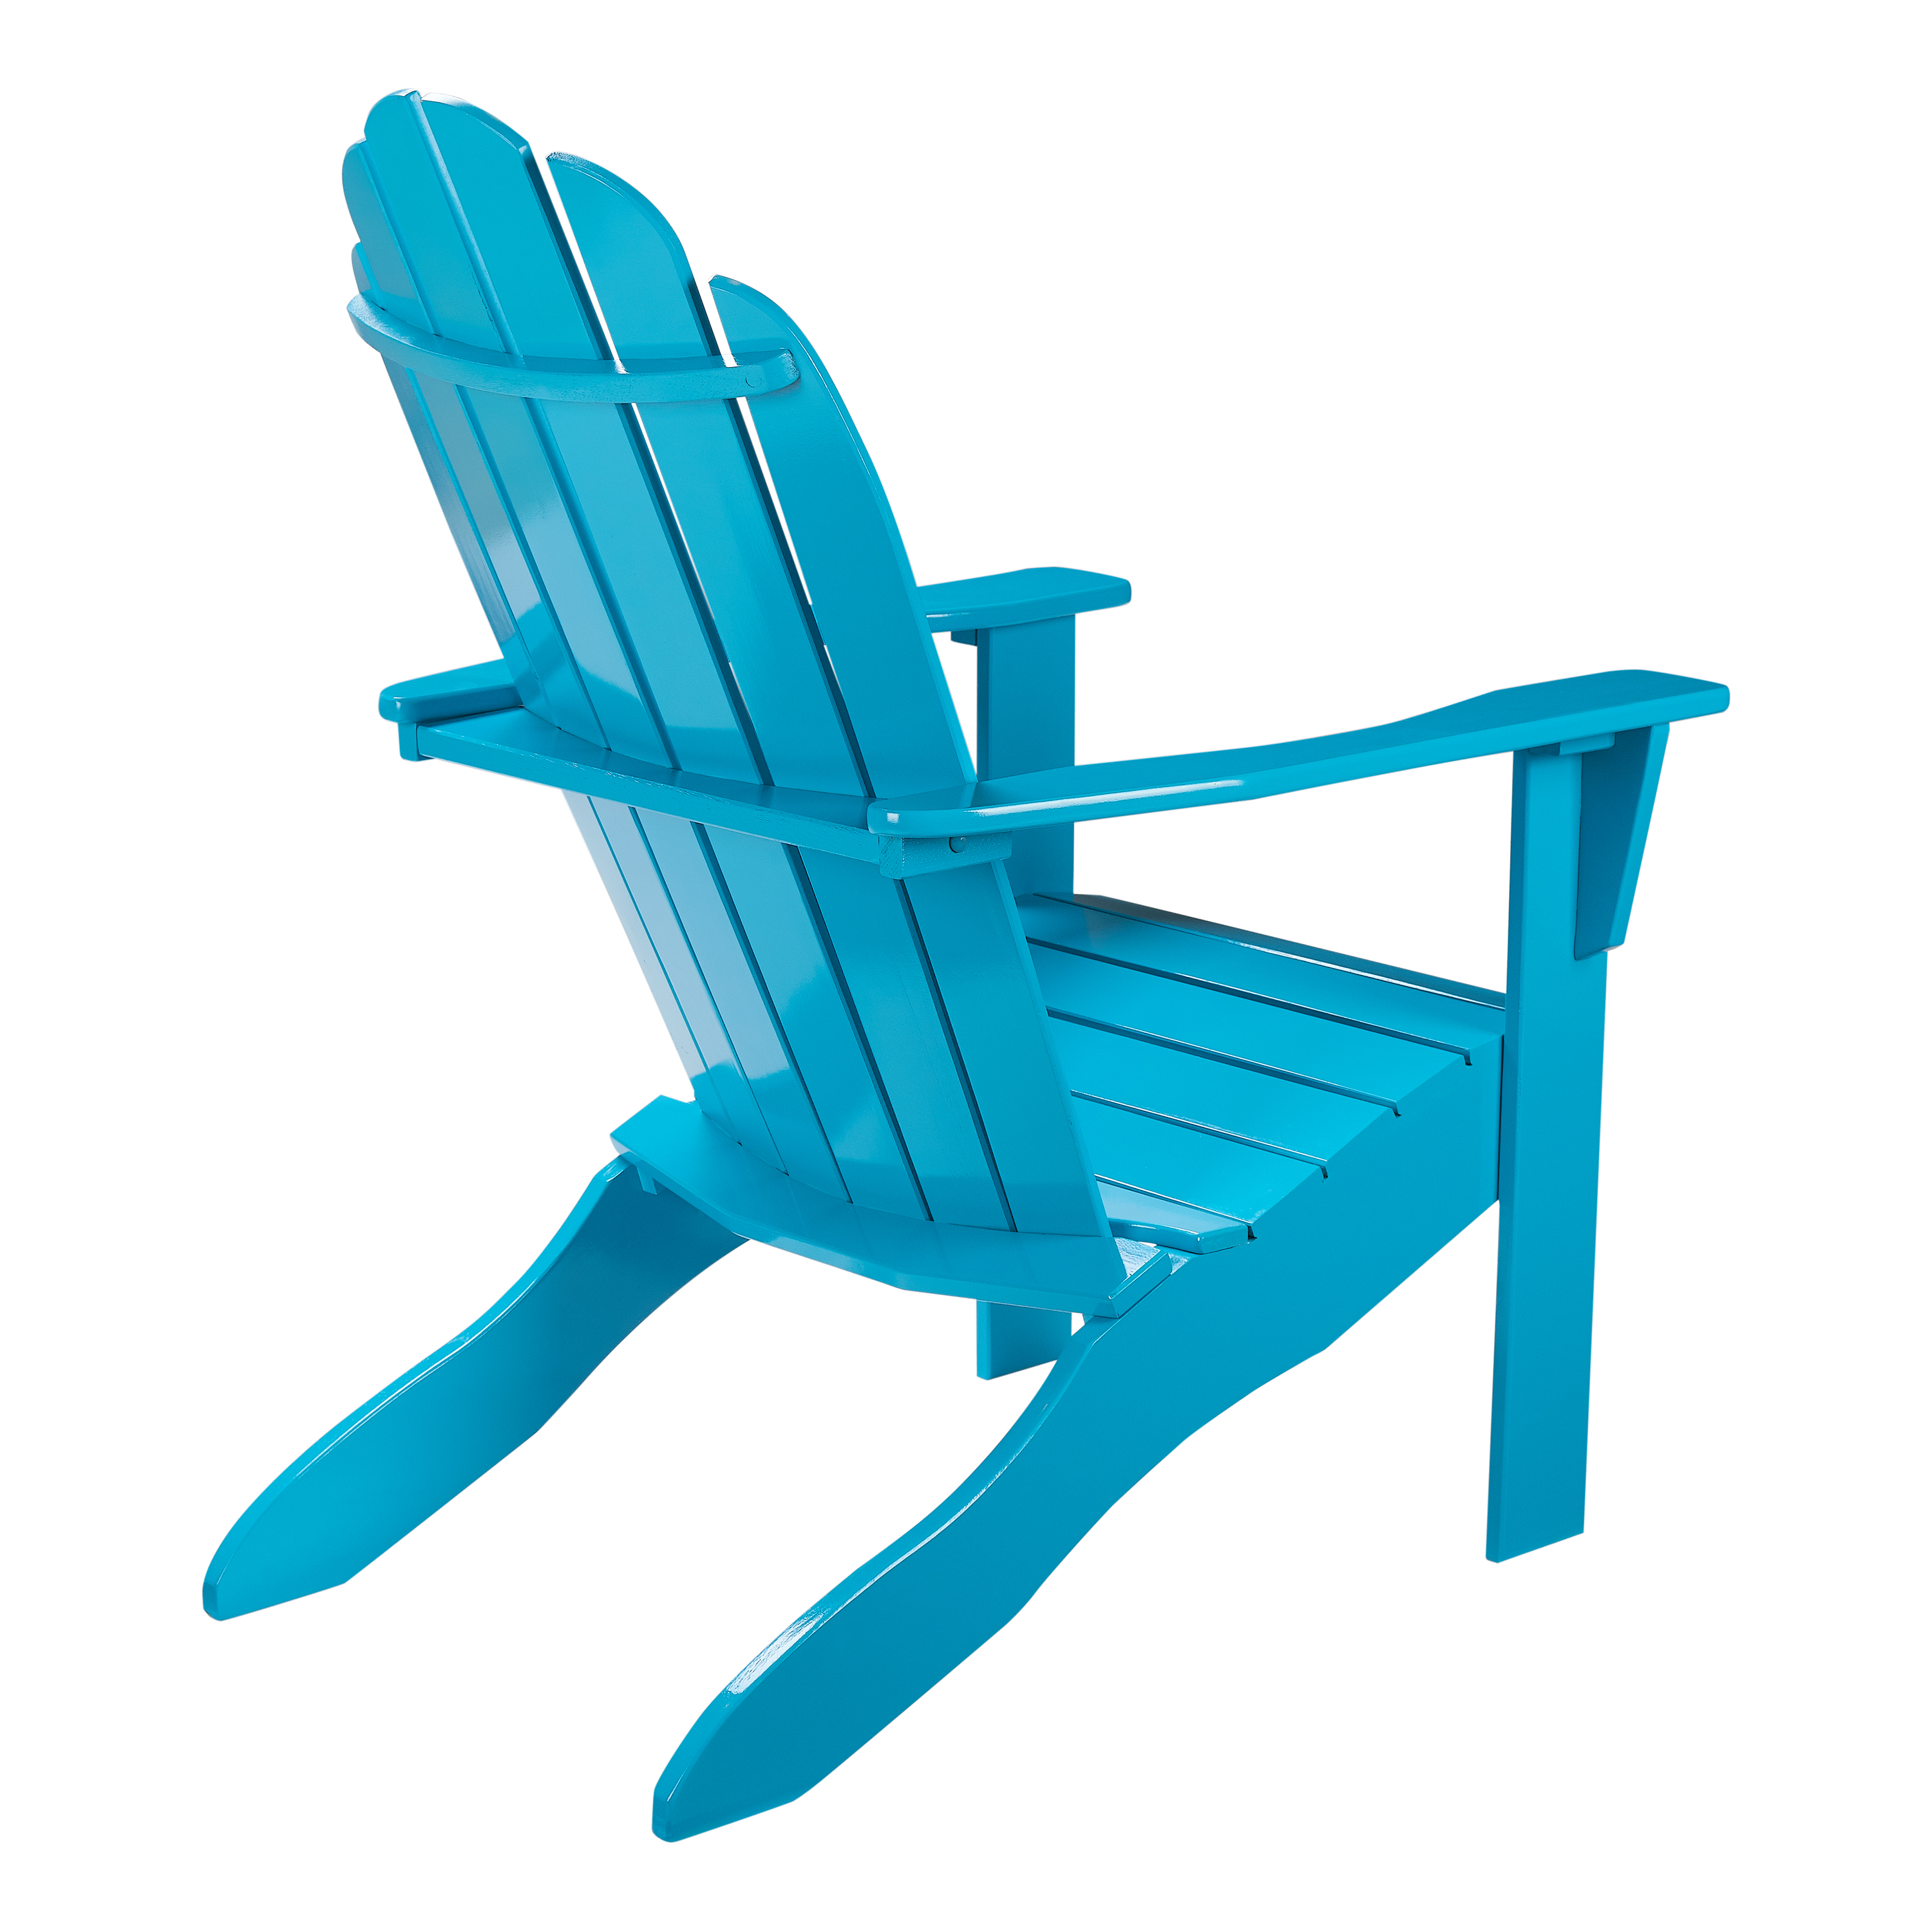 Mainstays Rubberwood Adirondack Chair - Turquoise - image 3 of 8